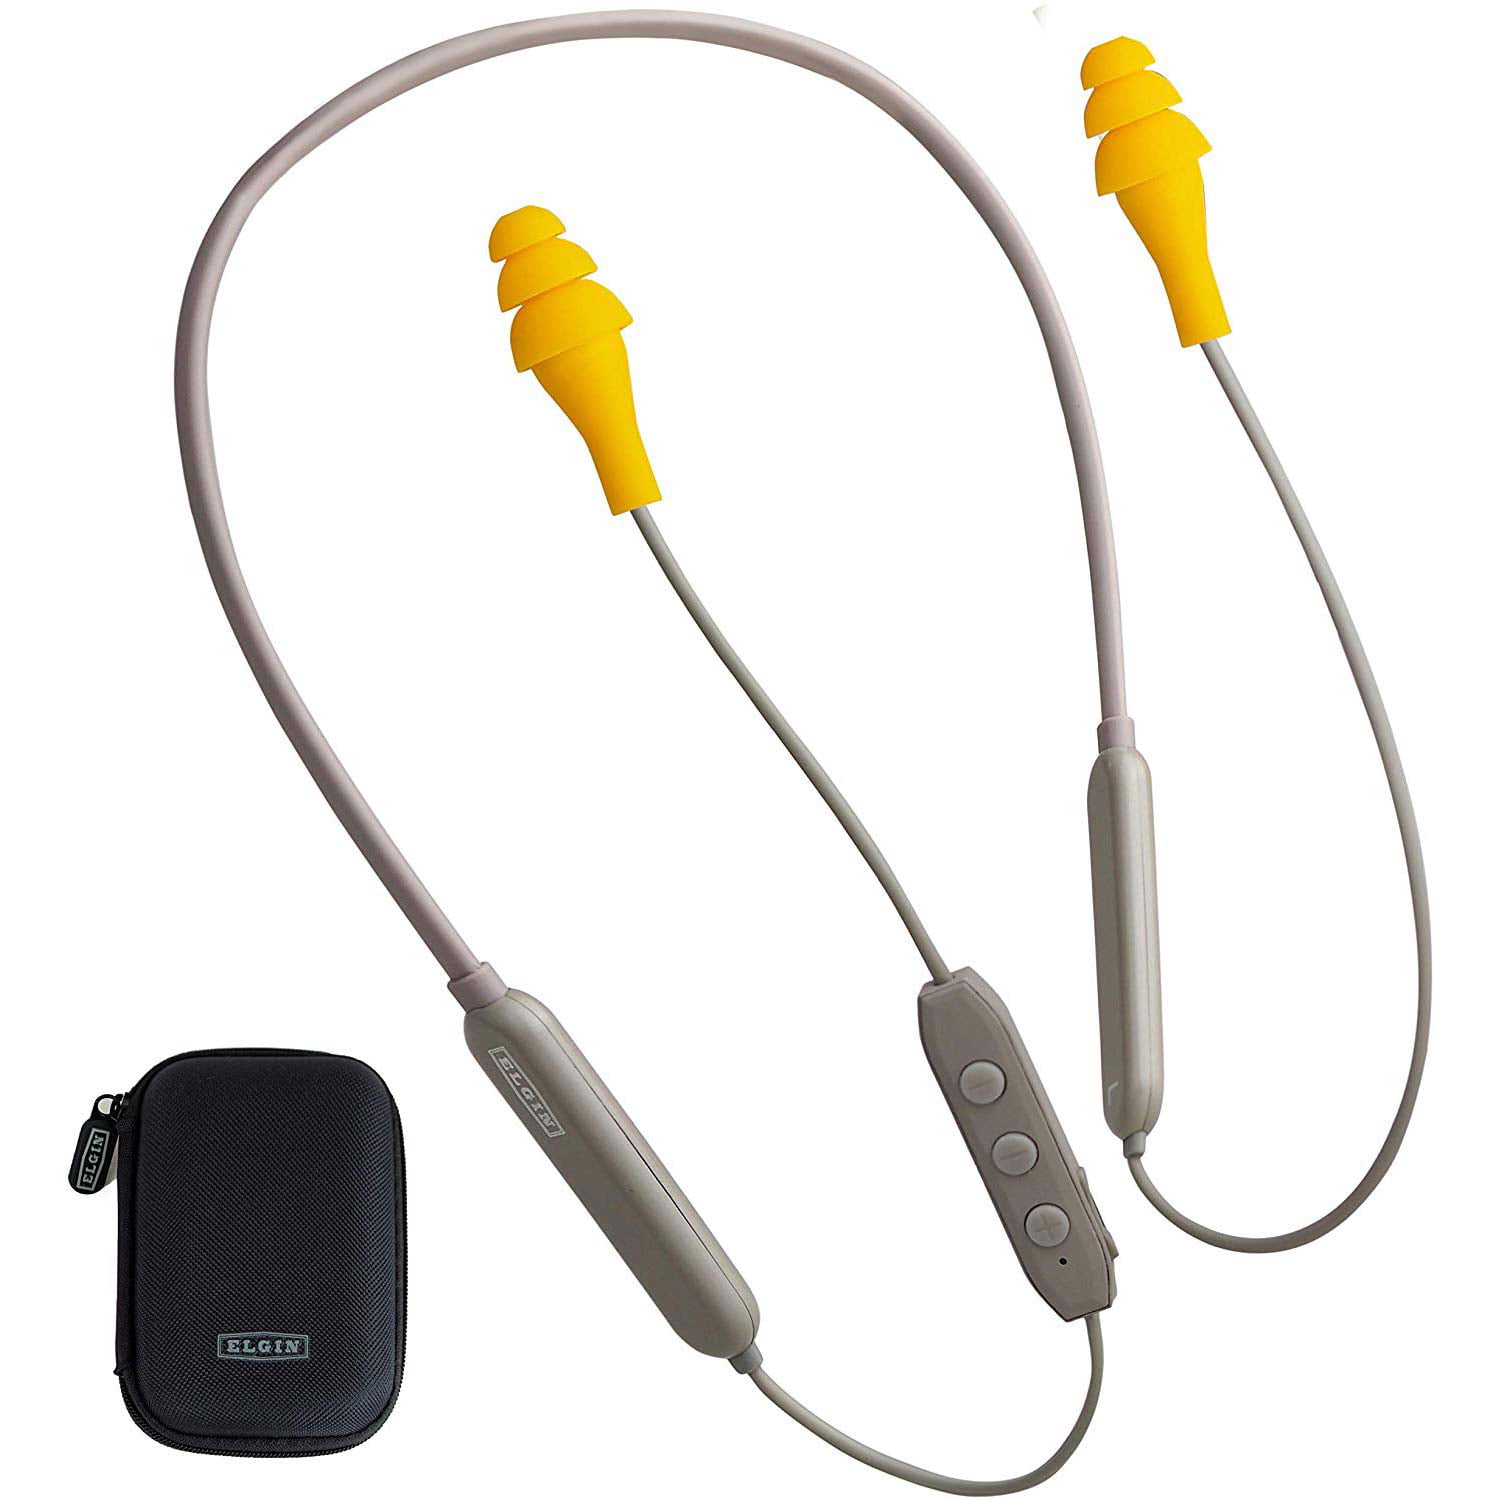 Plugfones Ear Plugs Earbuds 1st Generation Orange Hear Protection Gym Lawn 